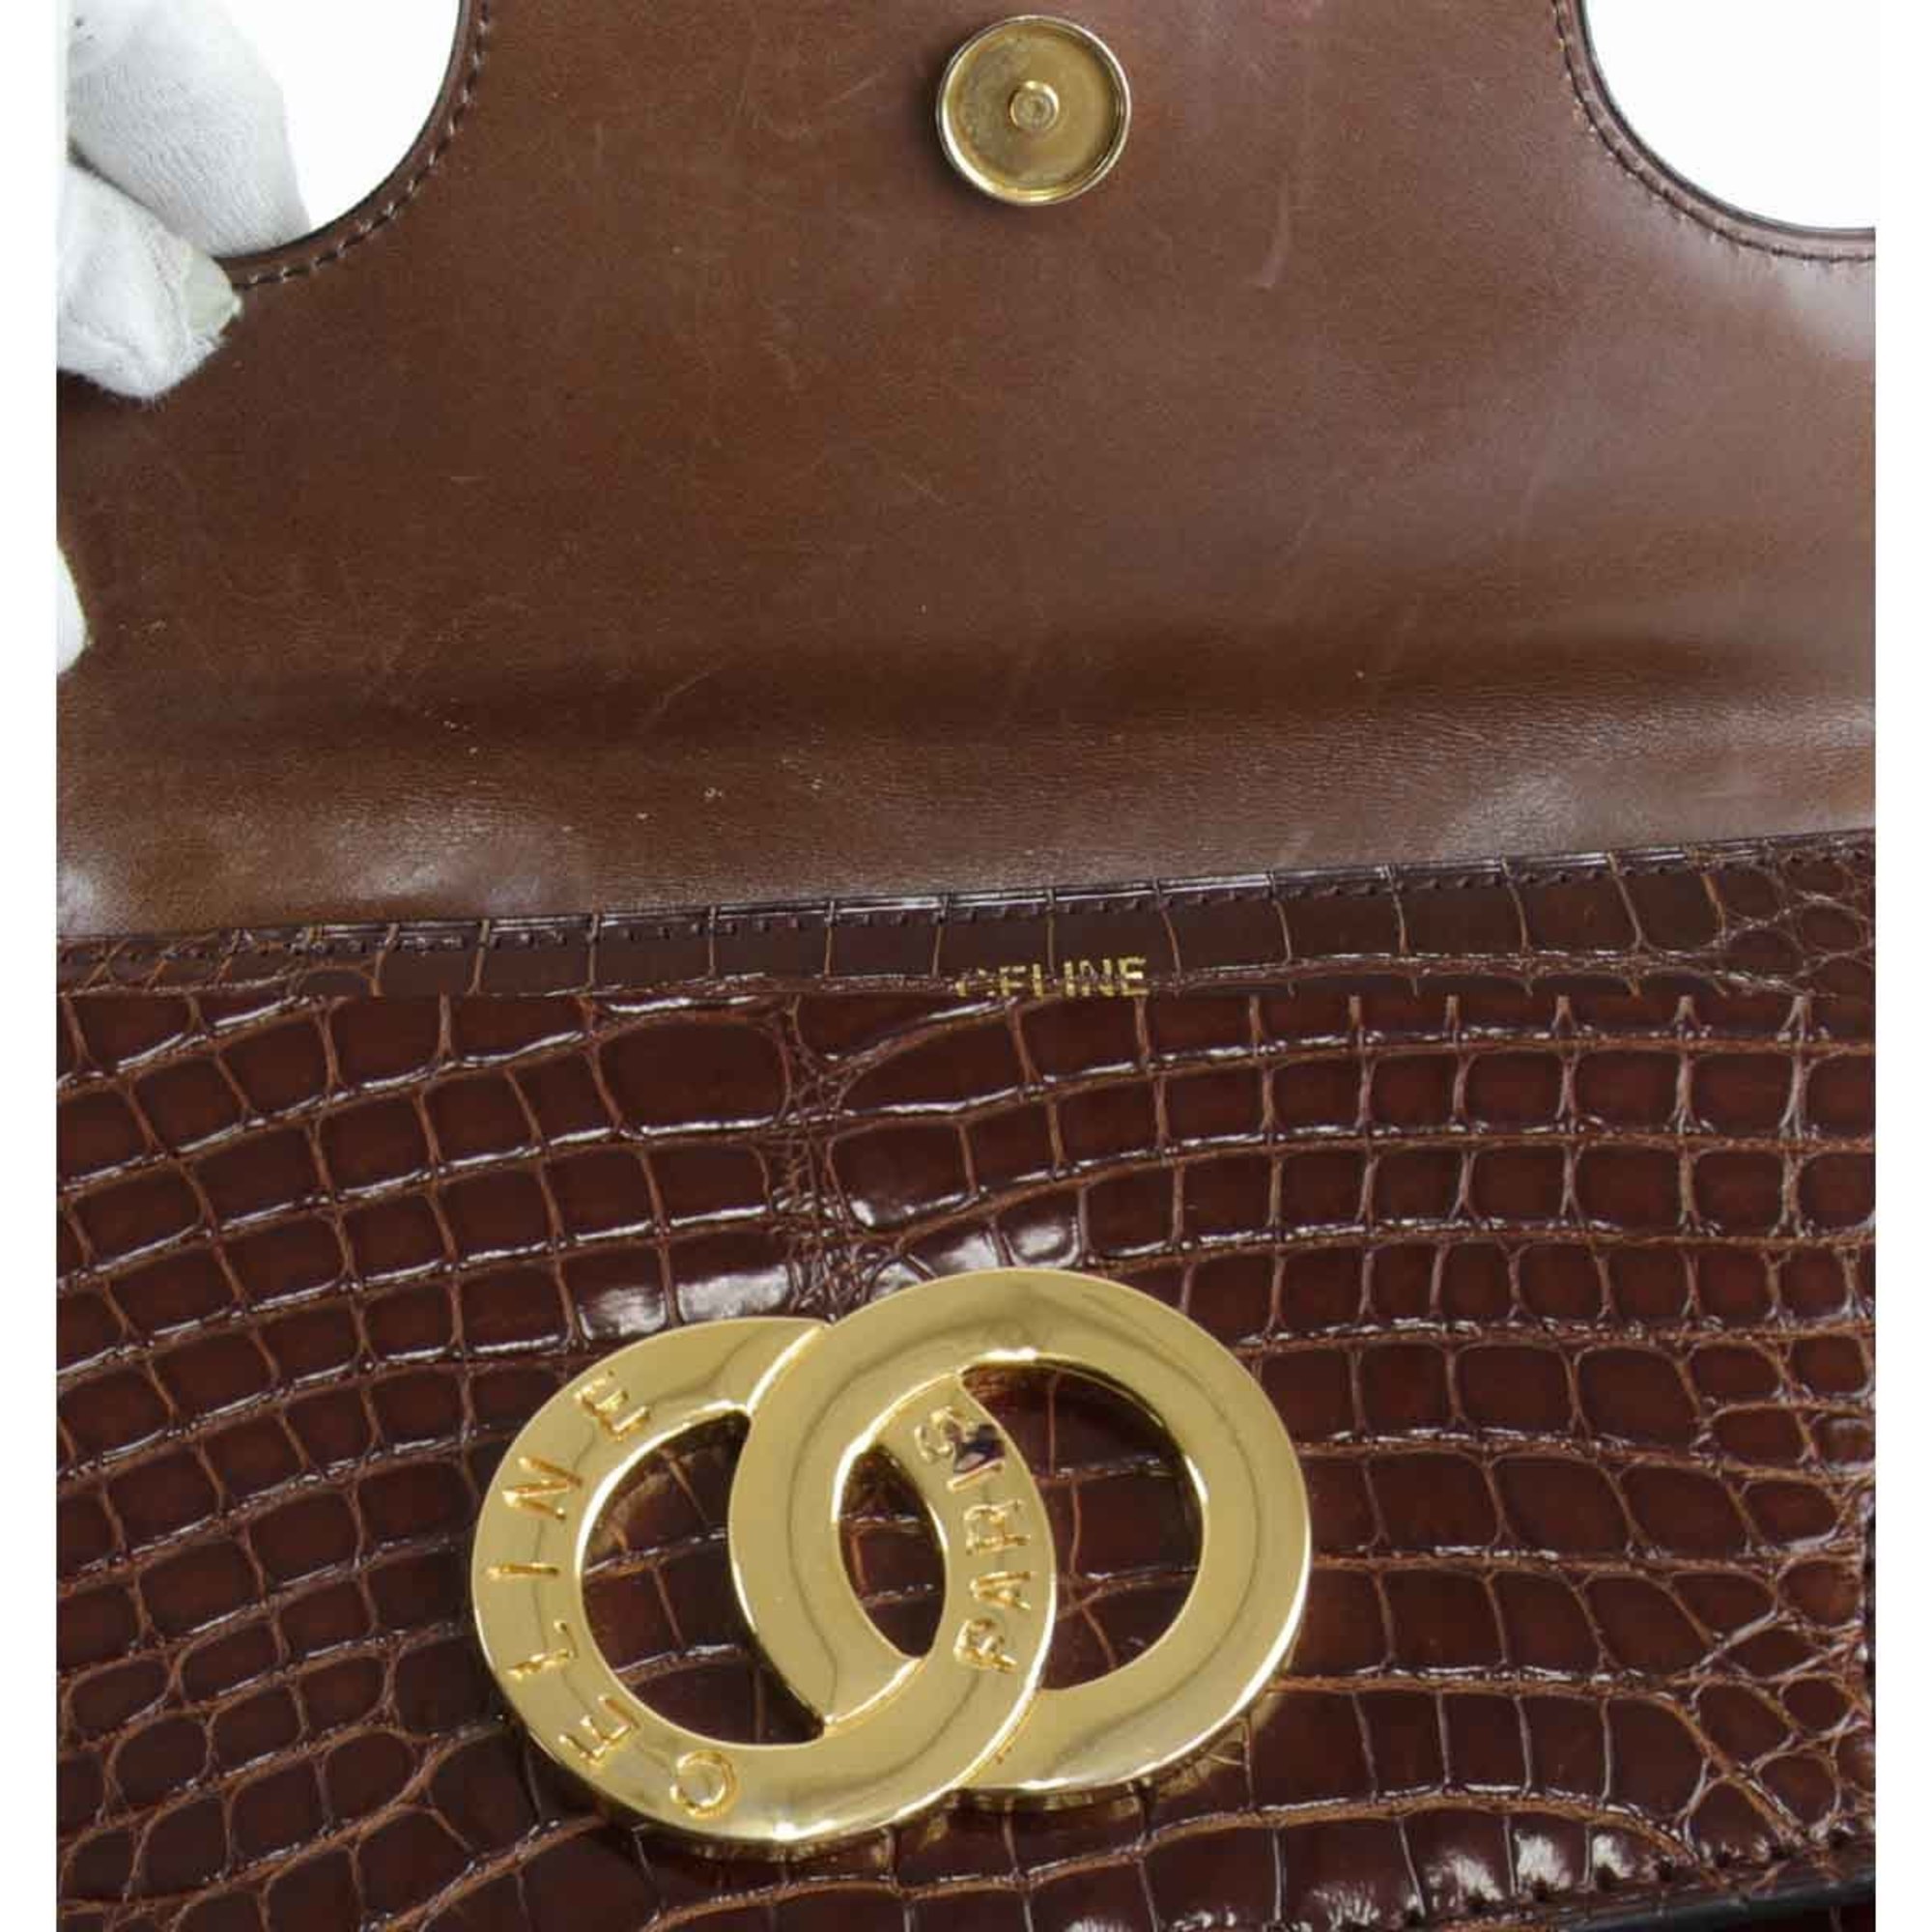 CELINE Celine Square Handbag Leather Brown Women's